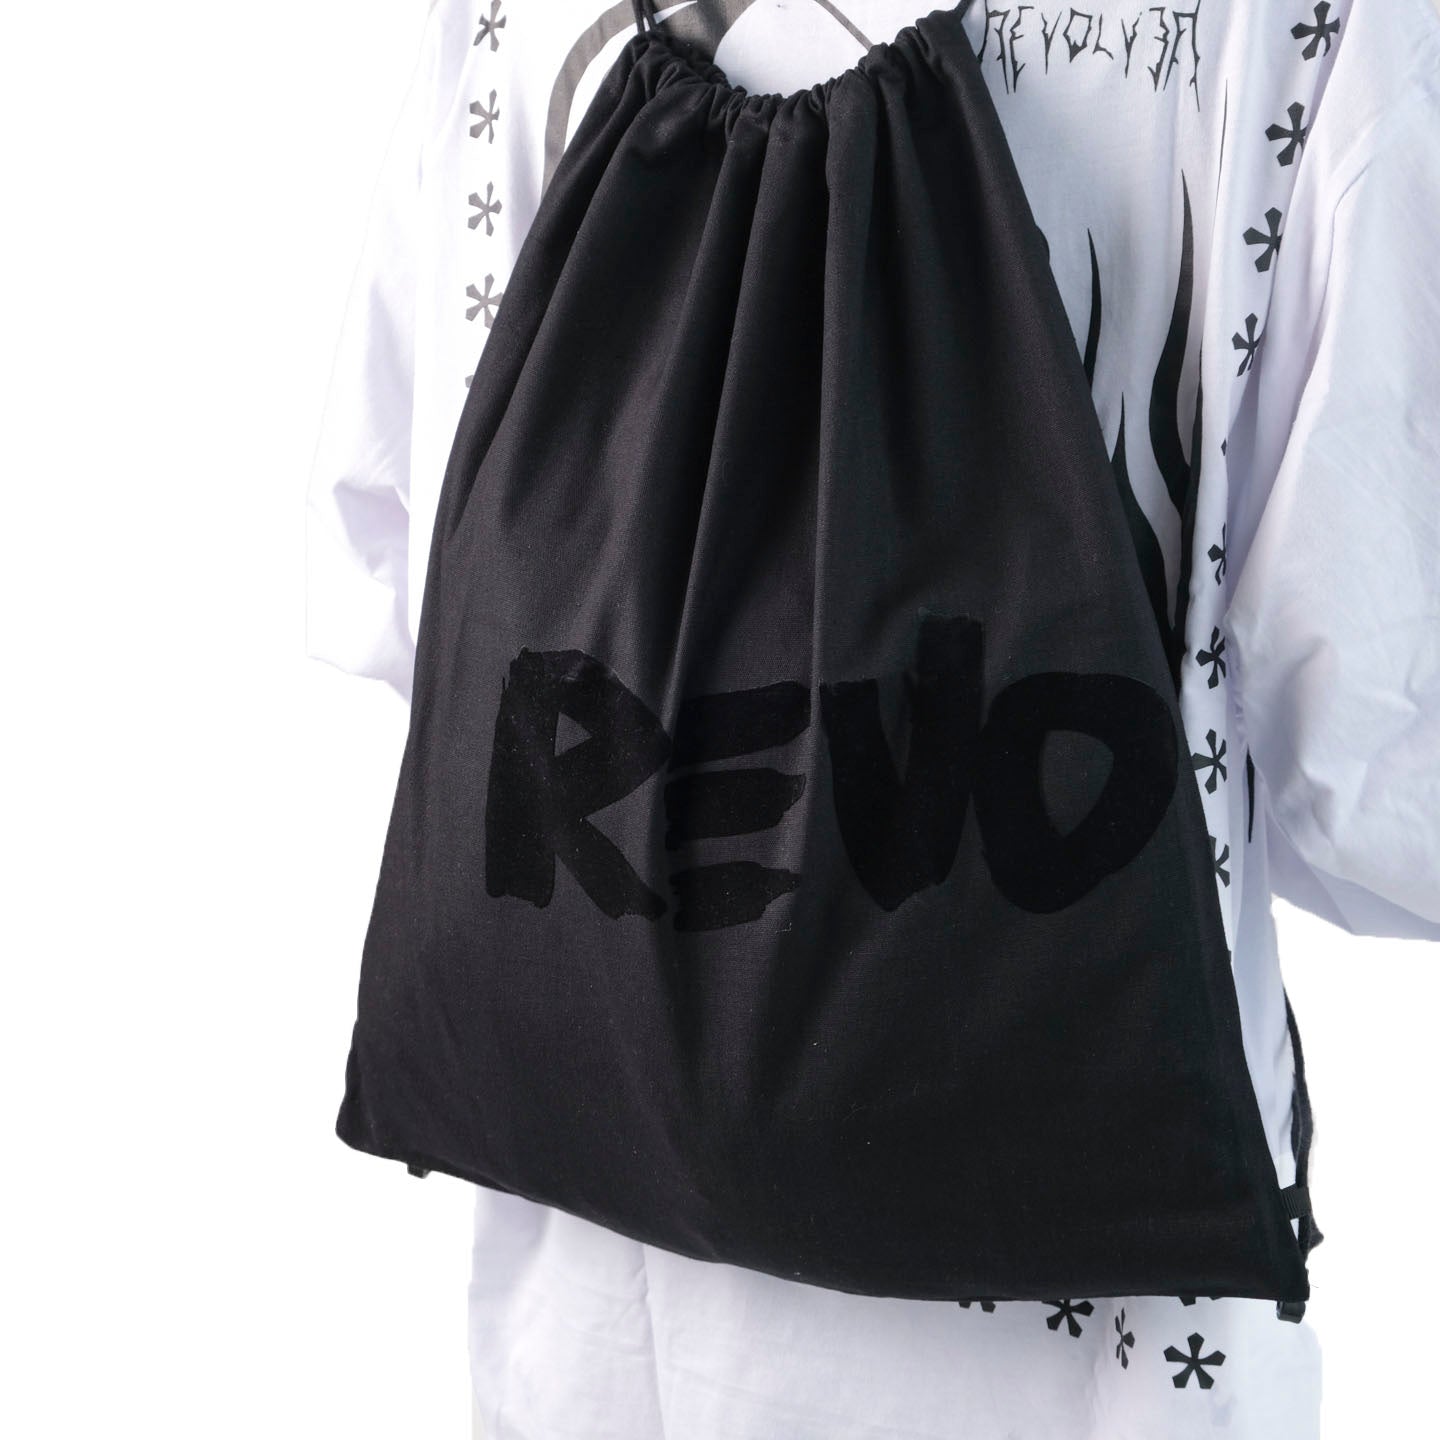 Revs Black Drawstring Bag